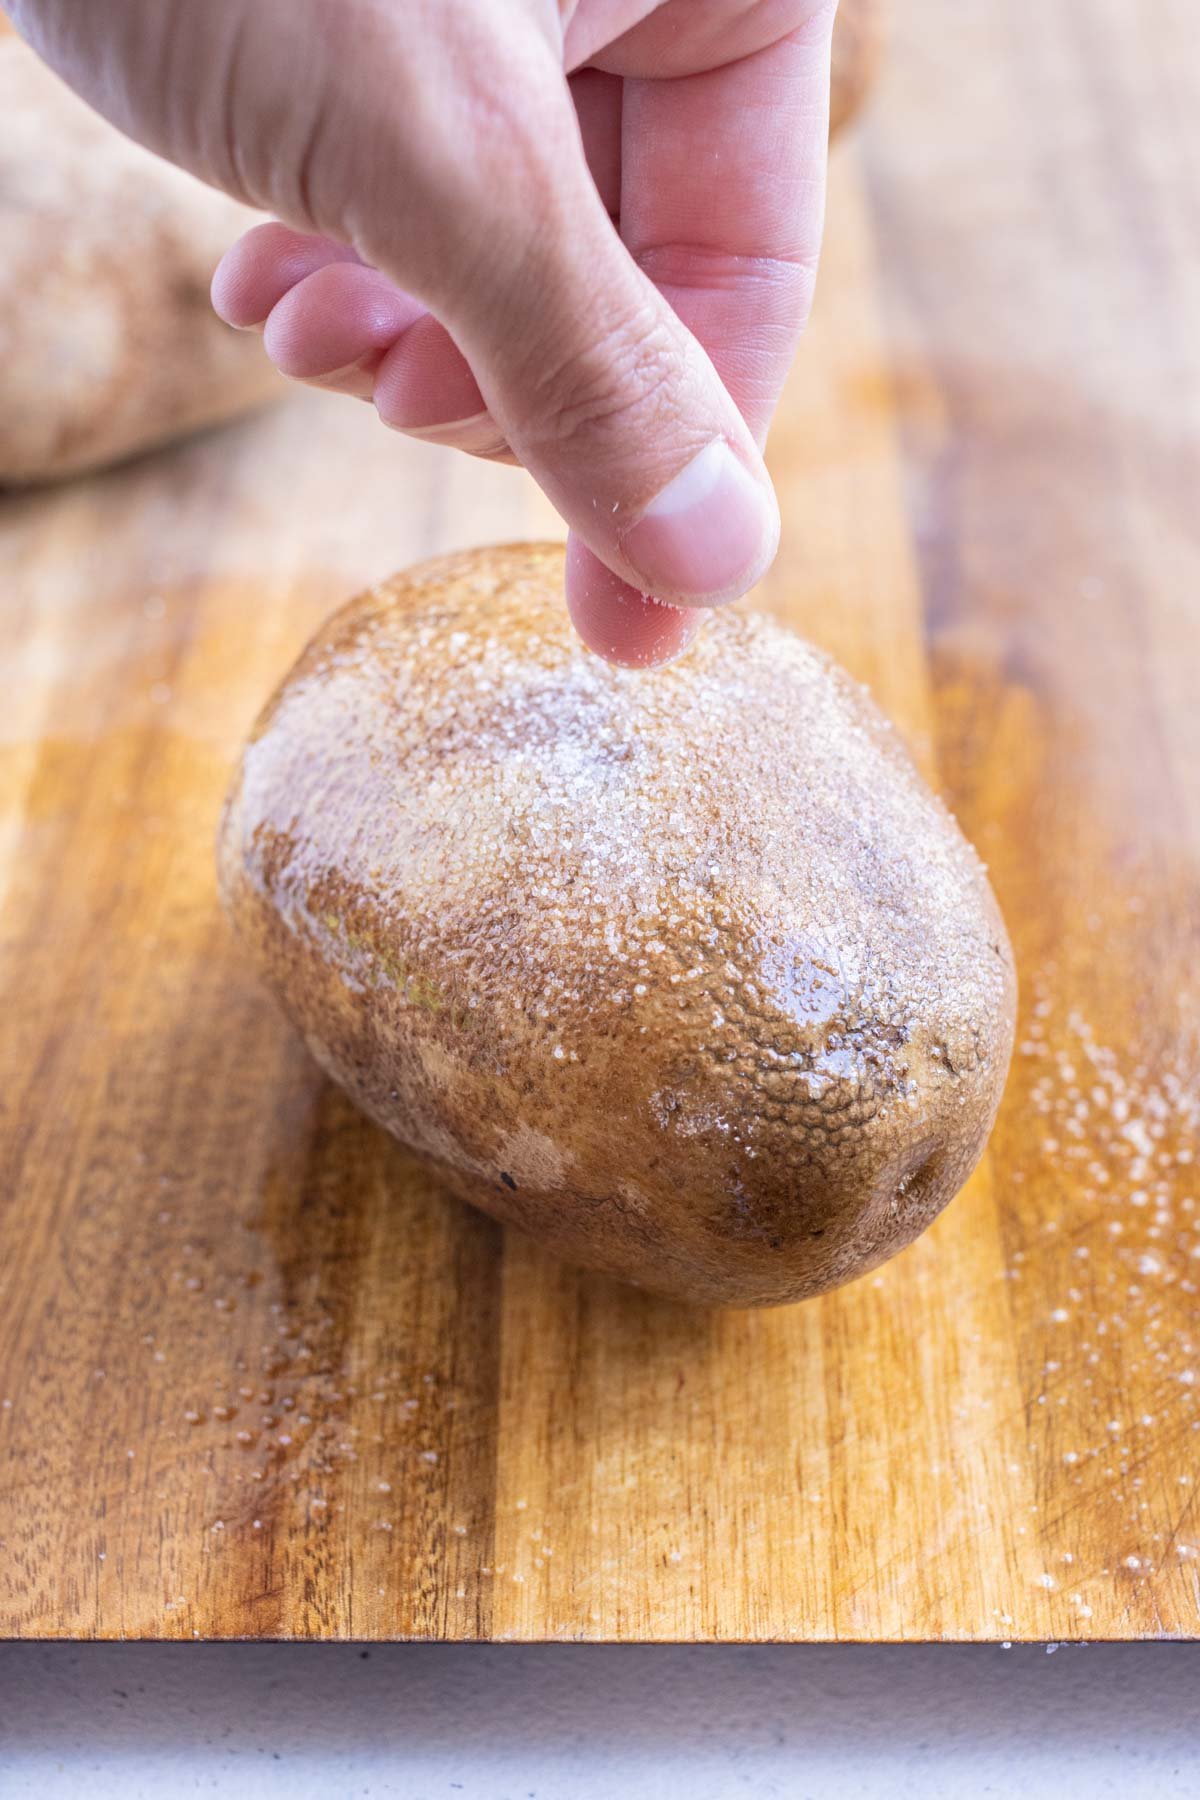 Salt is sprinkled on a potato with oil.